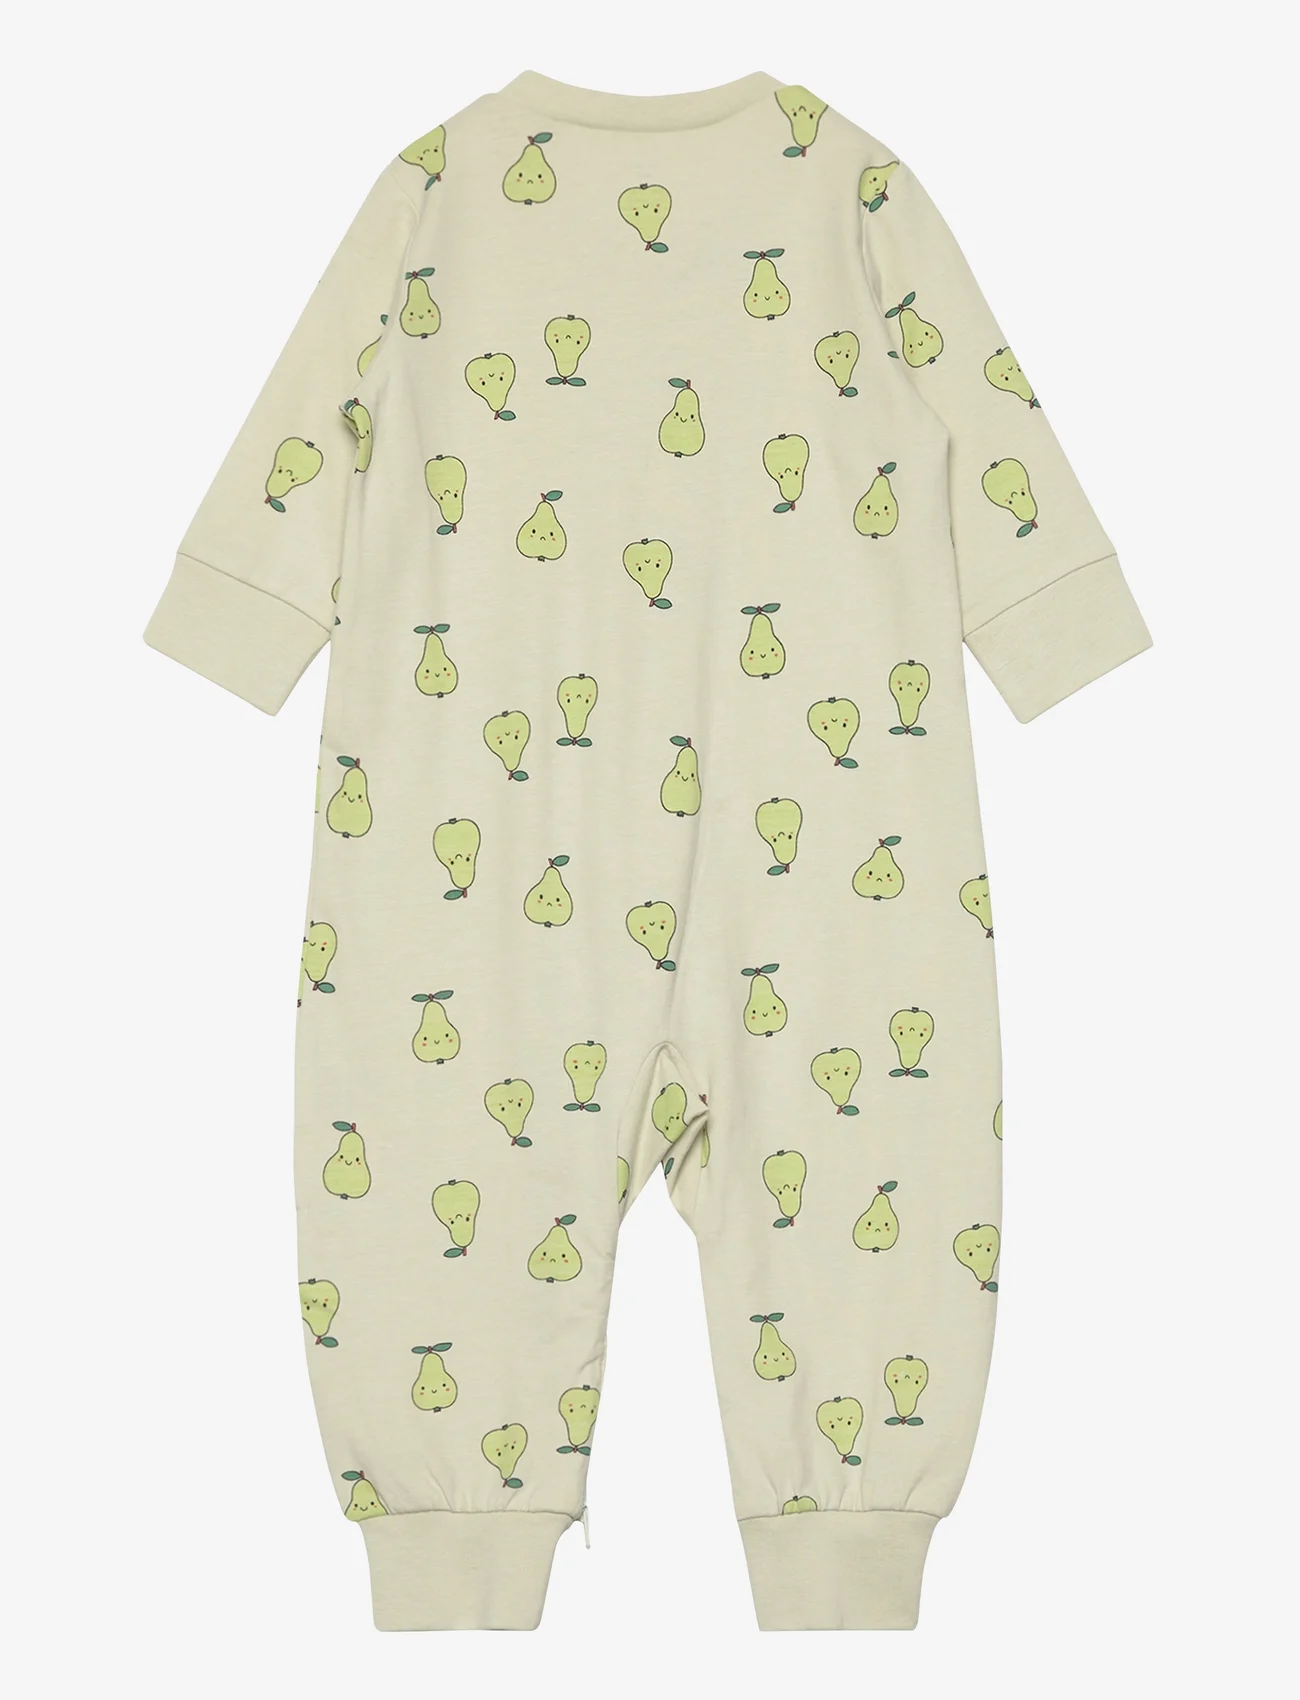 Lindex - Pyjamas pears - sleeping overalls - light dusty green - 1